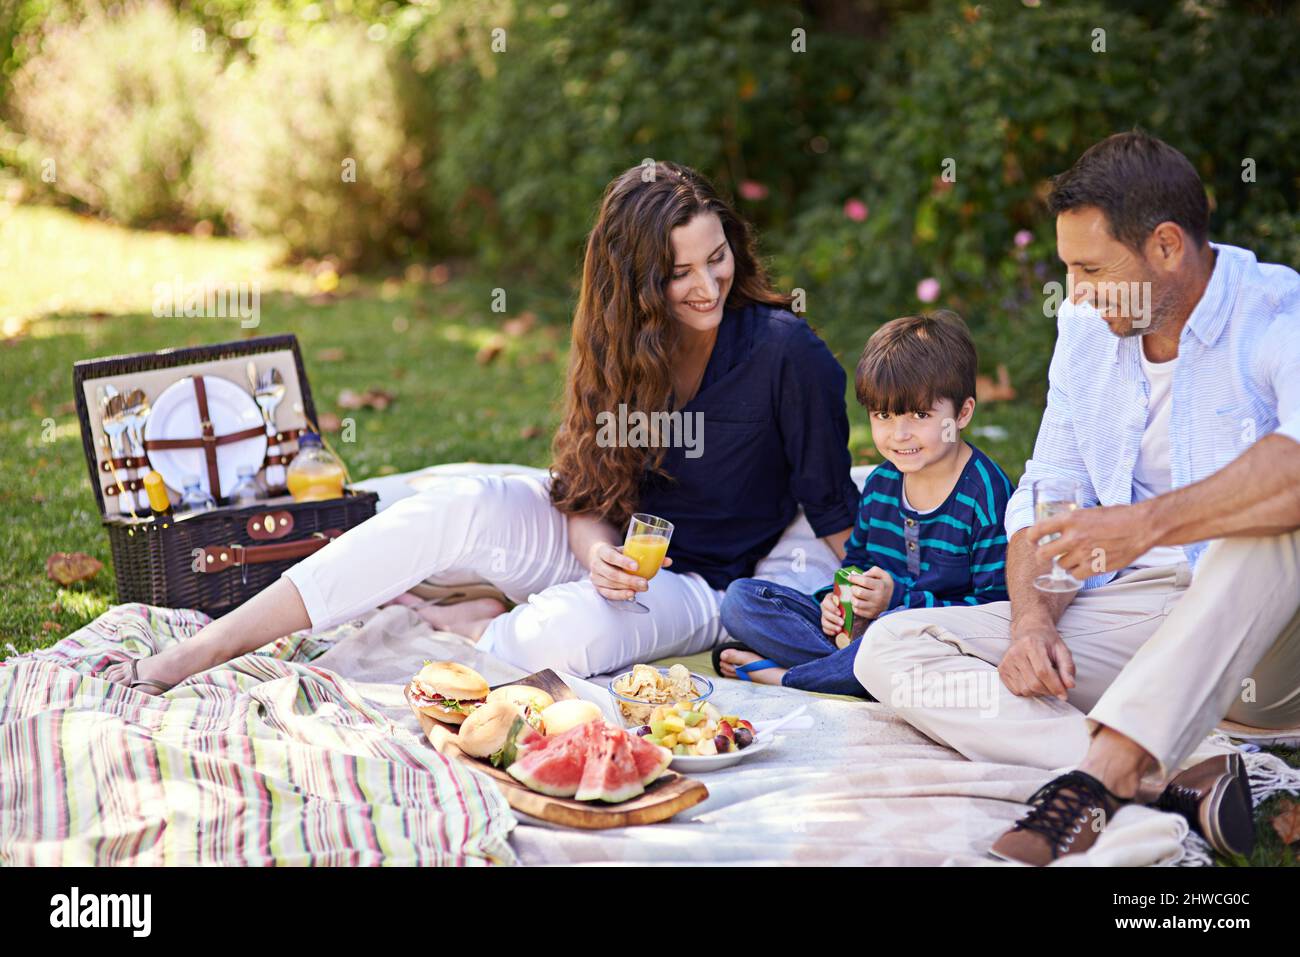 Enjoying their family picnic. Shot of a family enjoying a picnic together. Stock Photo